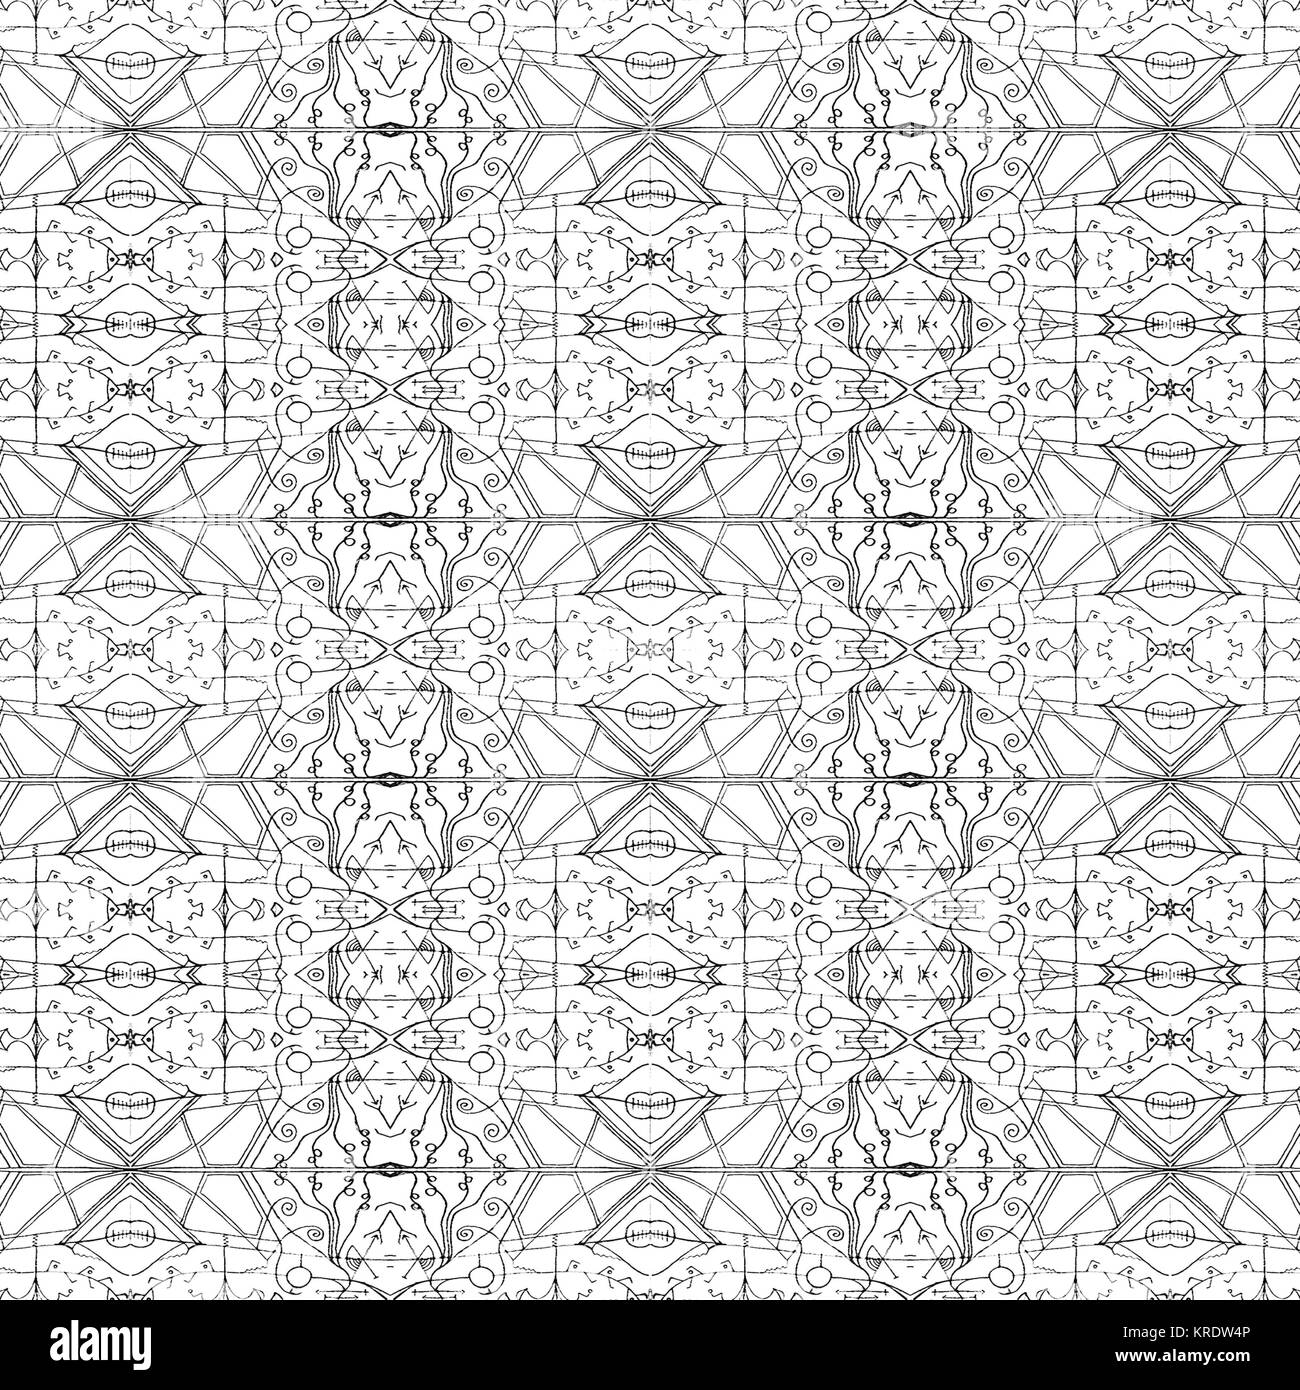 Black and White Ornate Pattern Stock Photo